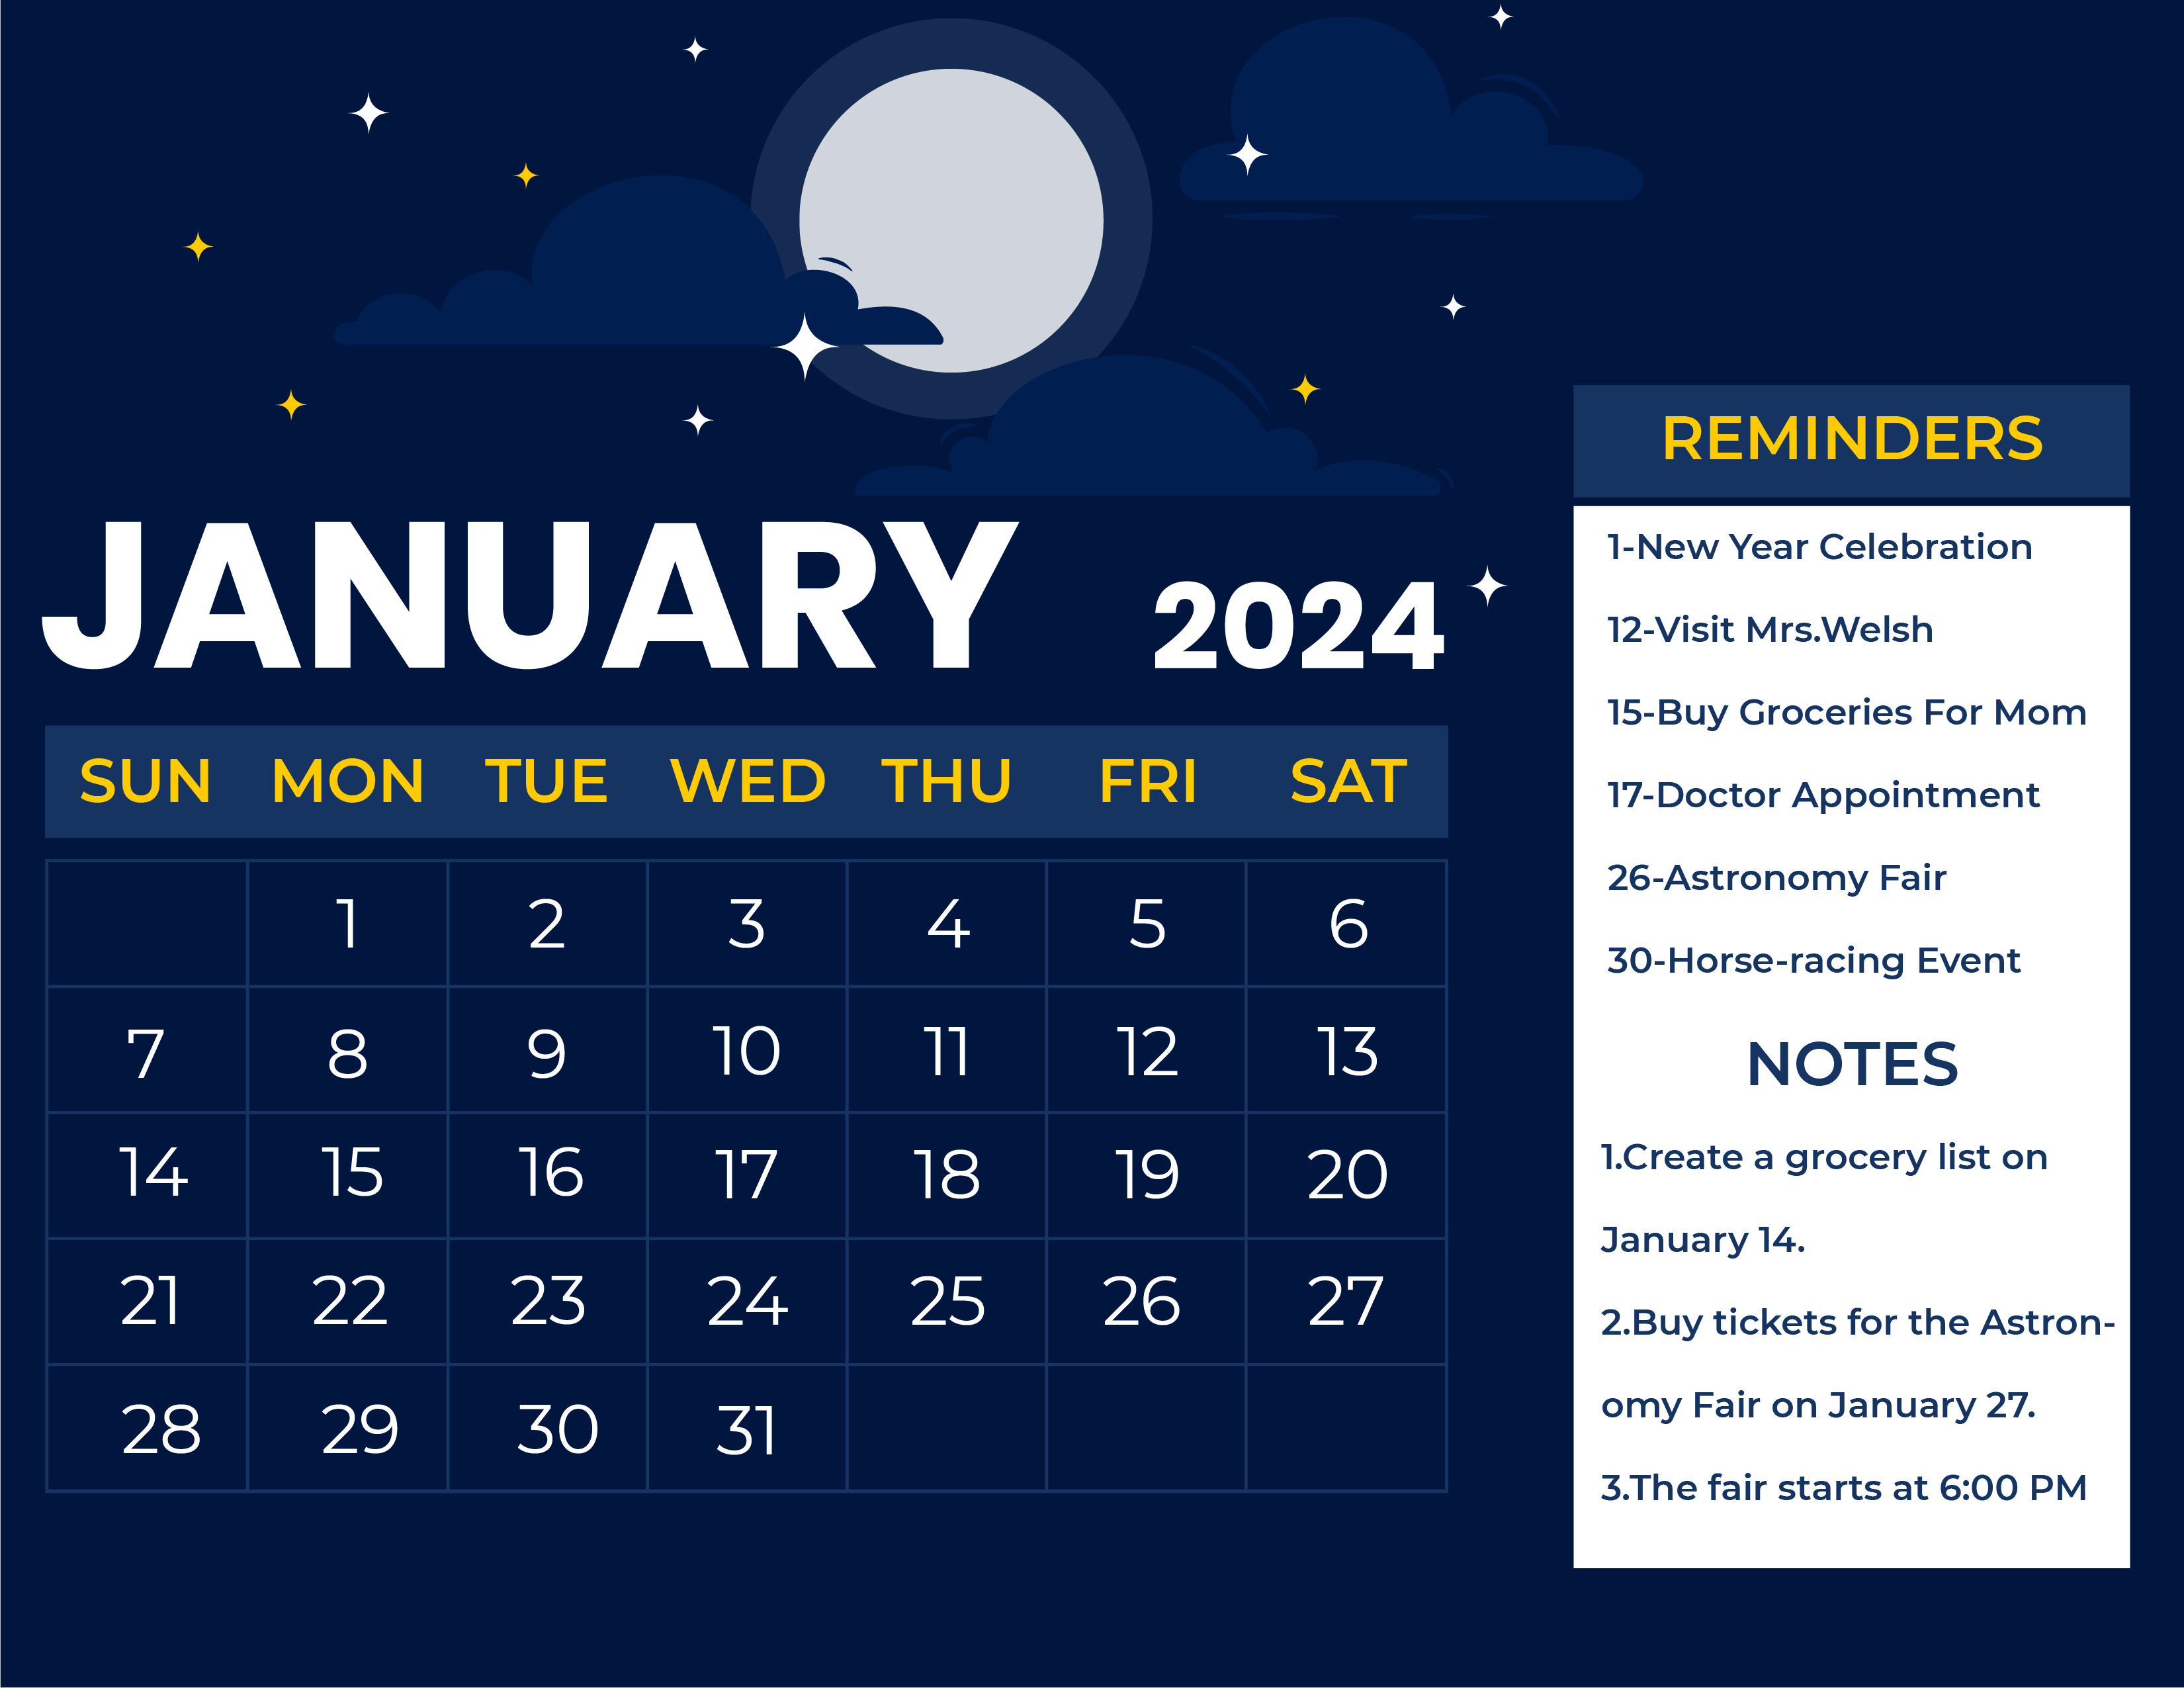 January 2024 Calendars - 50 FREE Printables